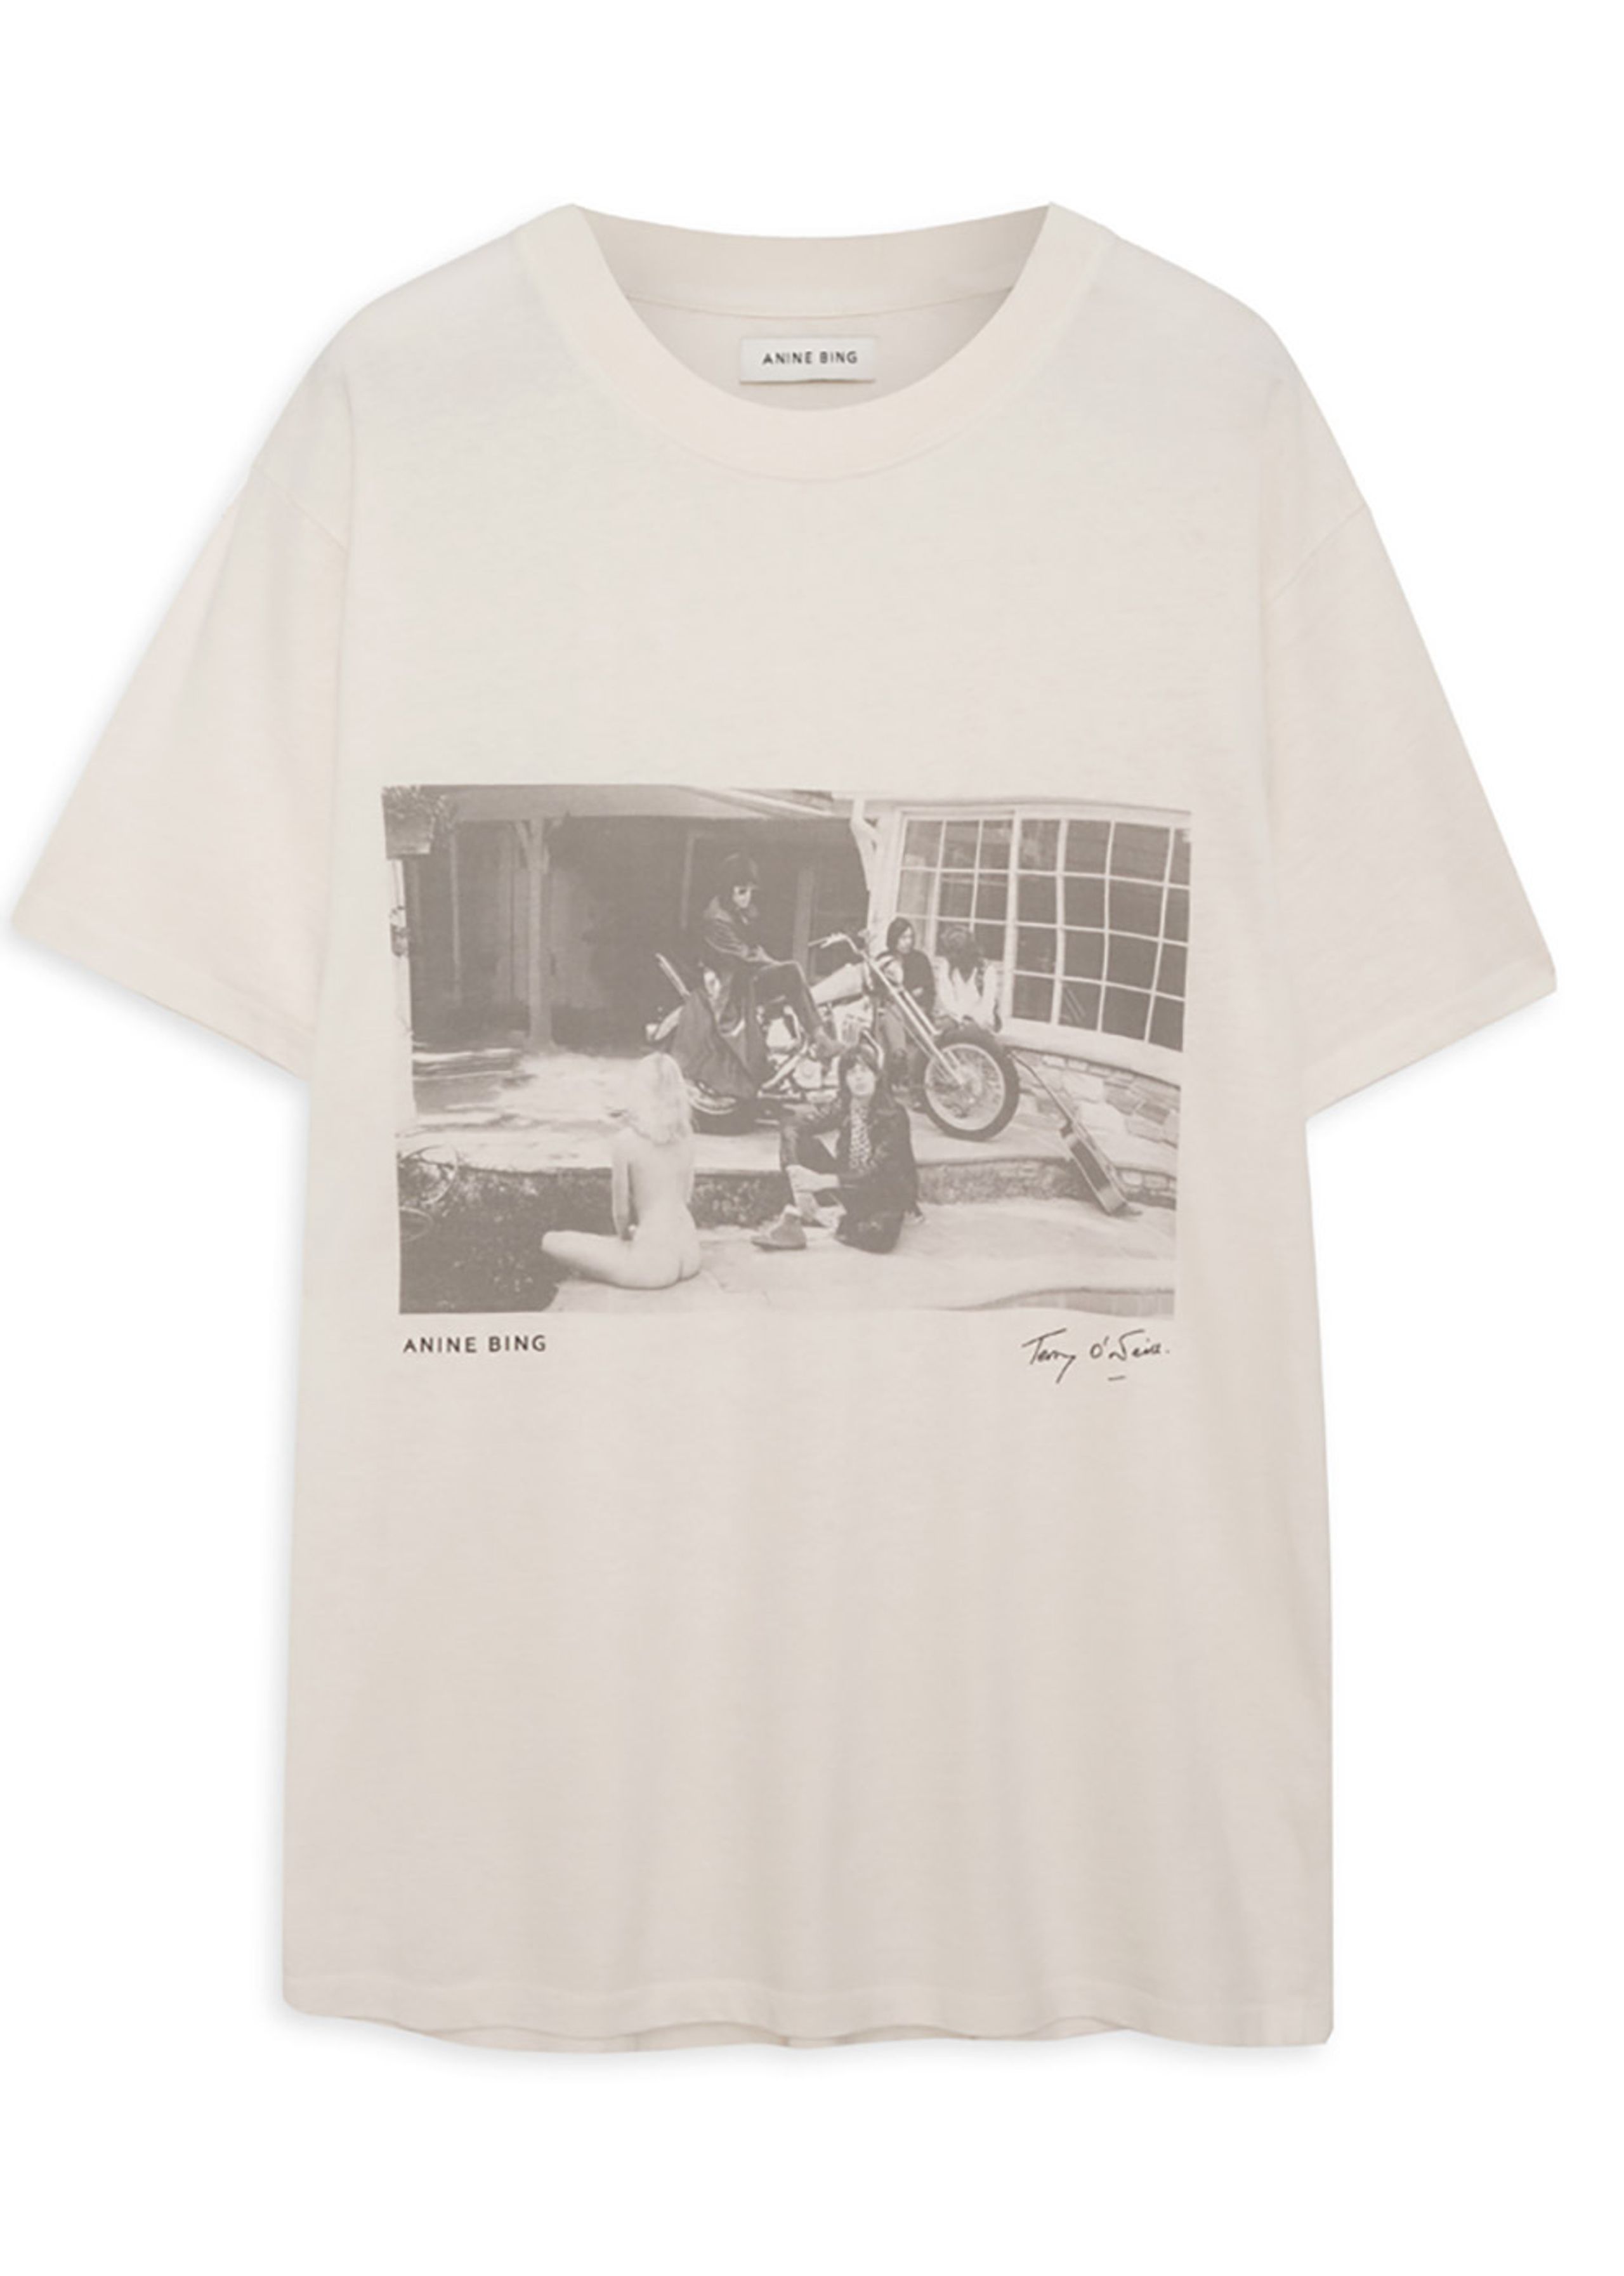 Anine Bing - T-shirt - Lili Tee AB x Roling Stones - Vintage White